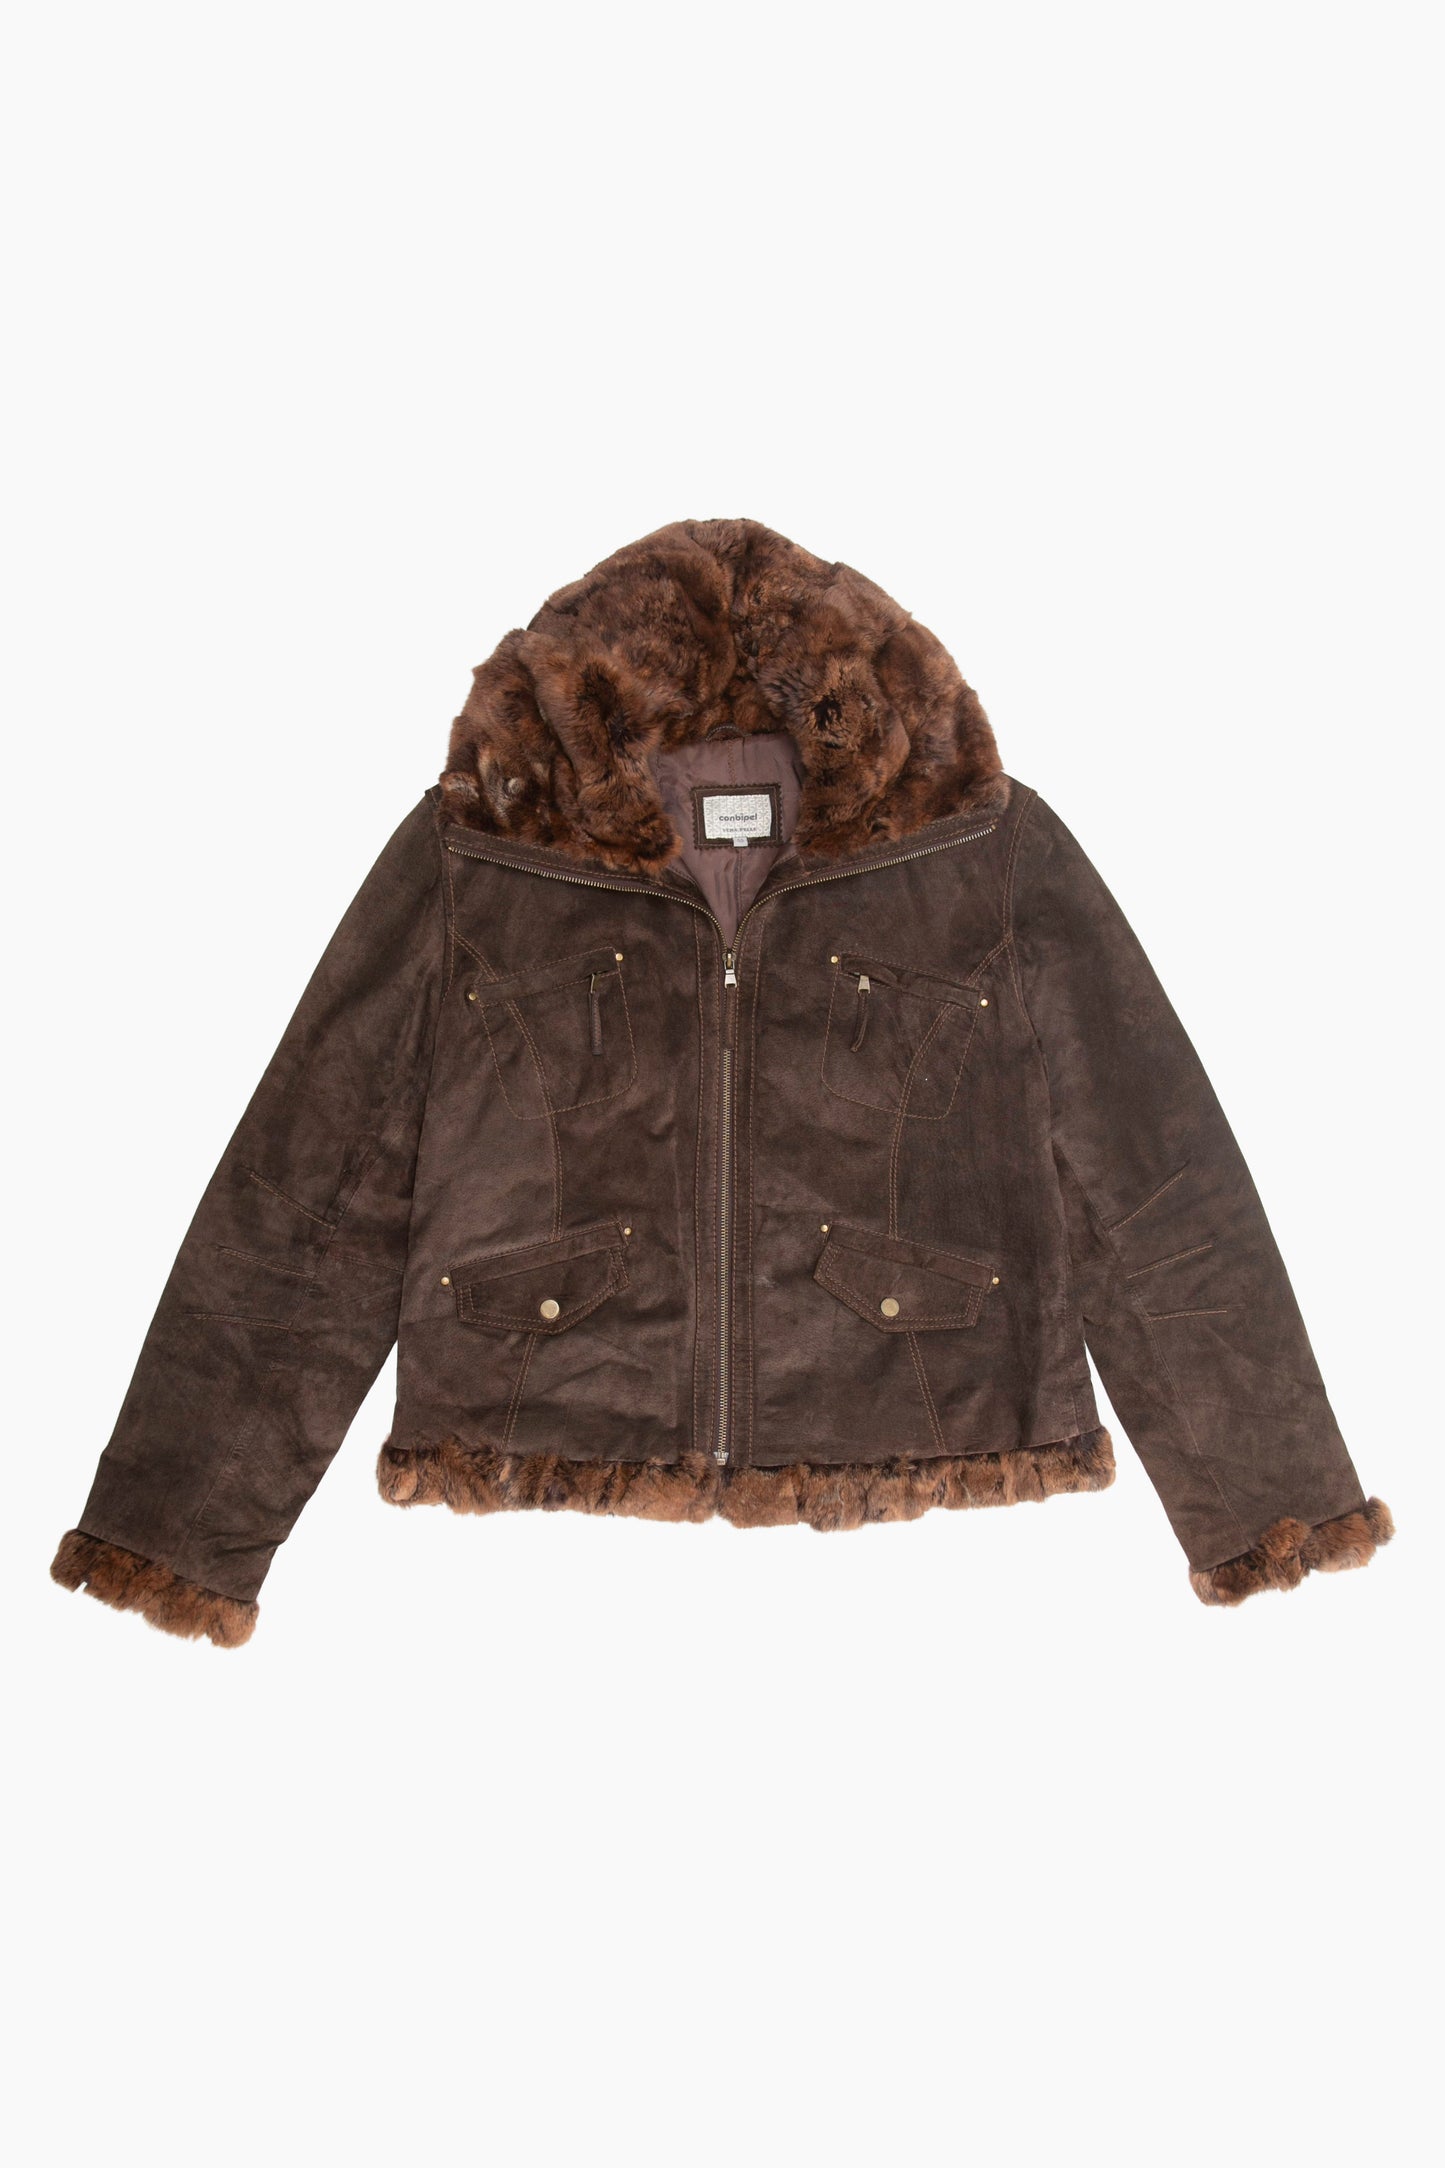 Brown Suede and Fur Jacket